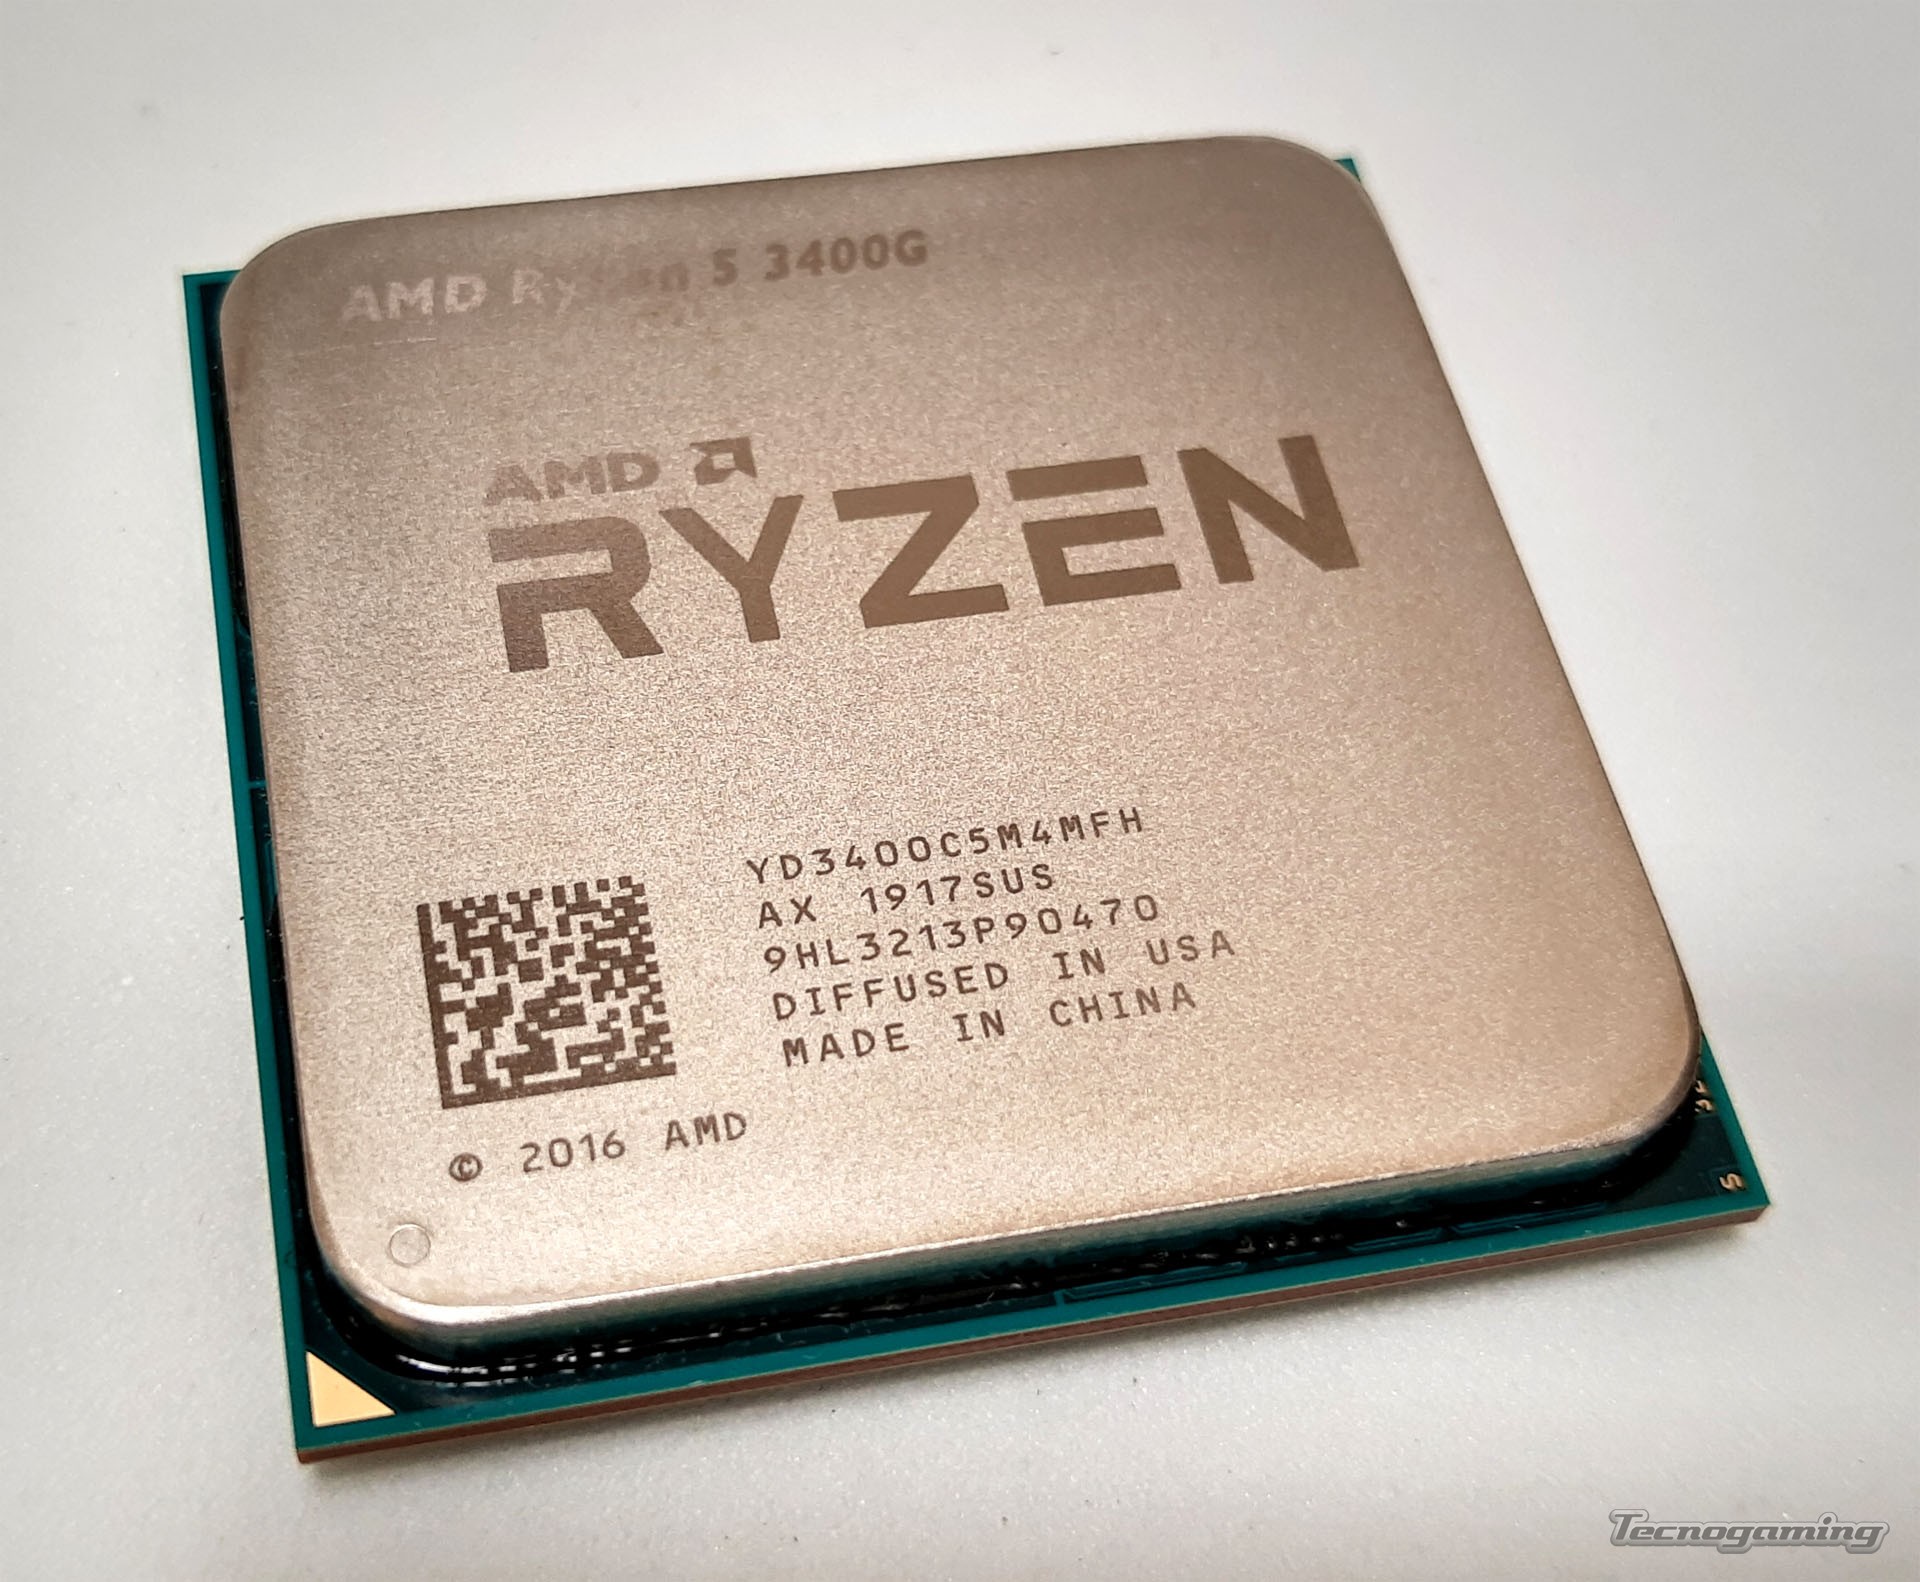 Ryzen 5 3400g. AMD Ryzen 5 3400g with Radeon Vega Graphics. 3400g Ryzen фото. Ryzen 3400g мыльная картинка.